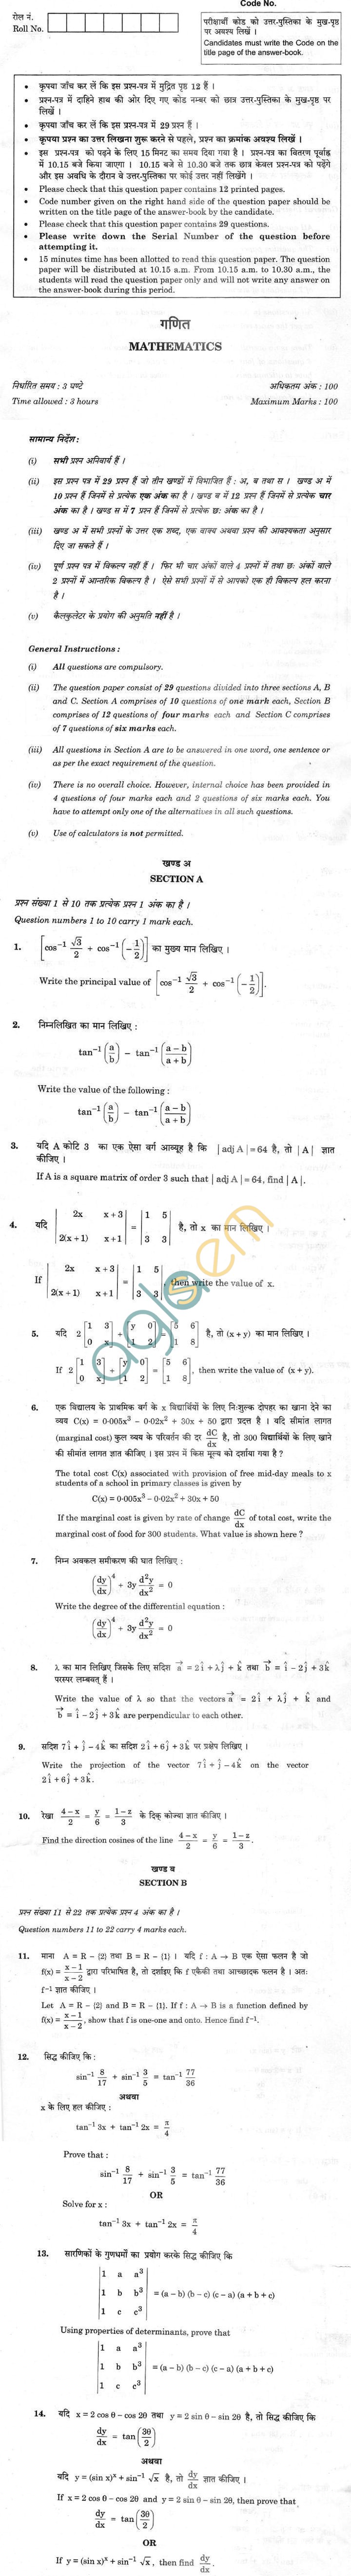 CBSE Compartment Exam 2013 Class XII Question Paper - Mathematics